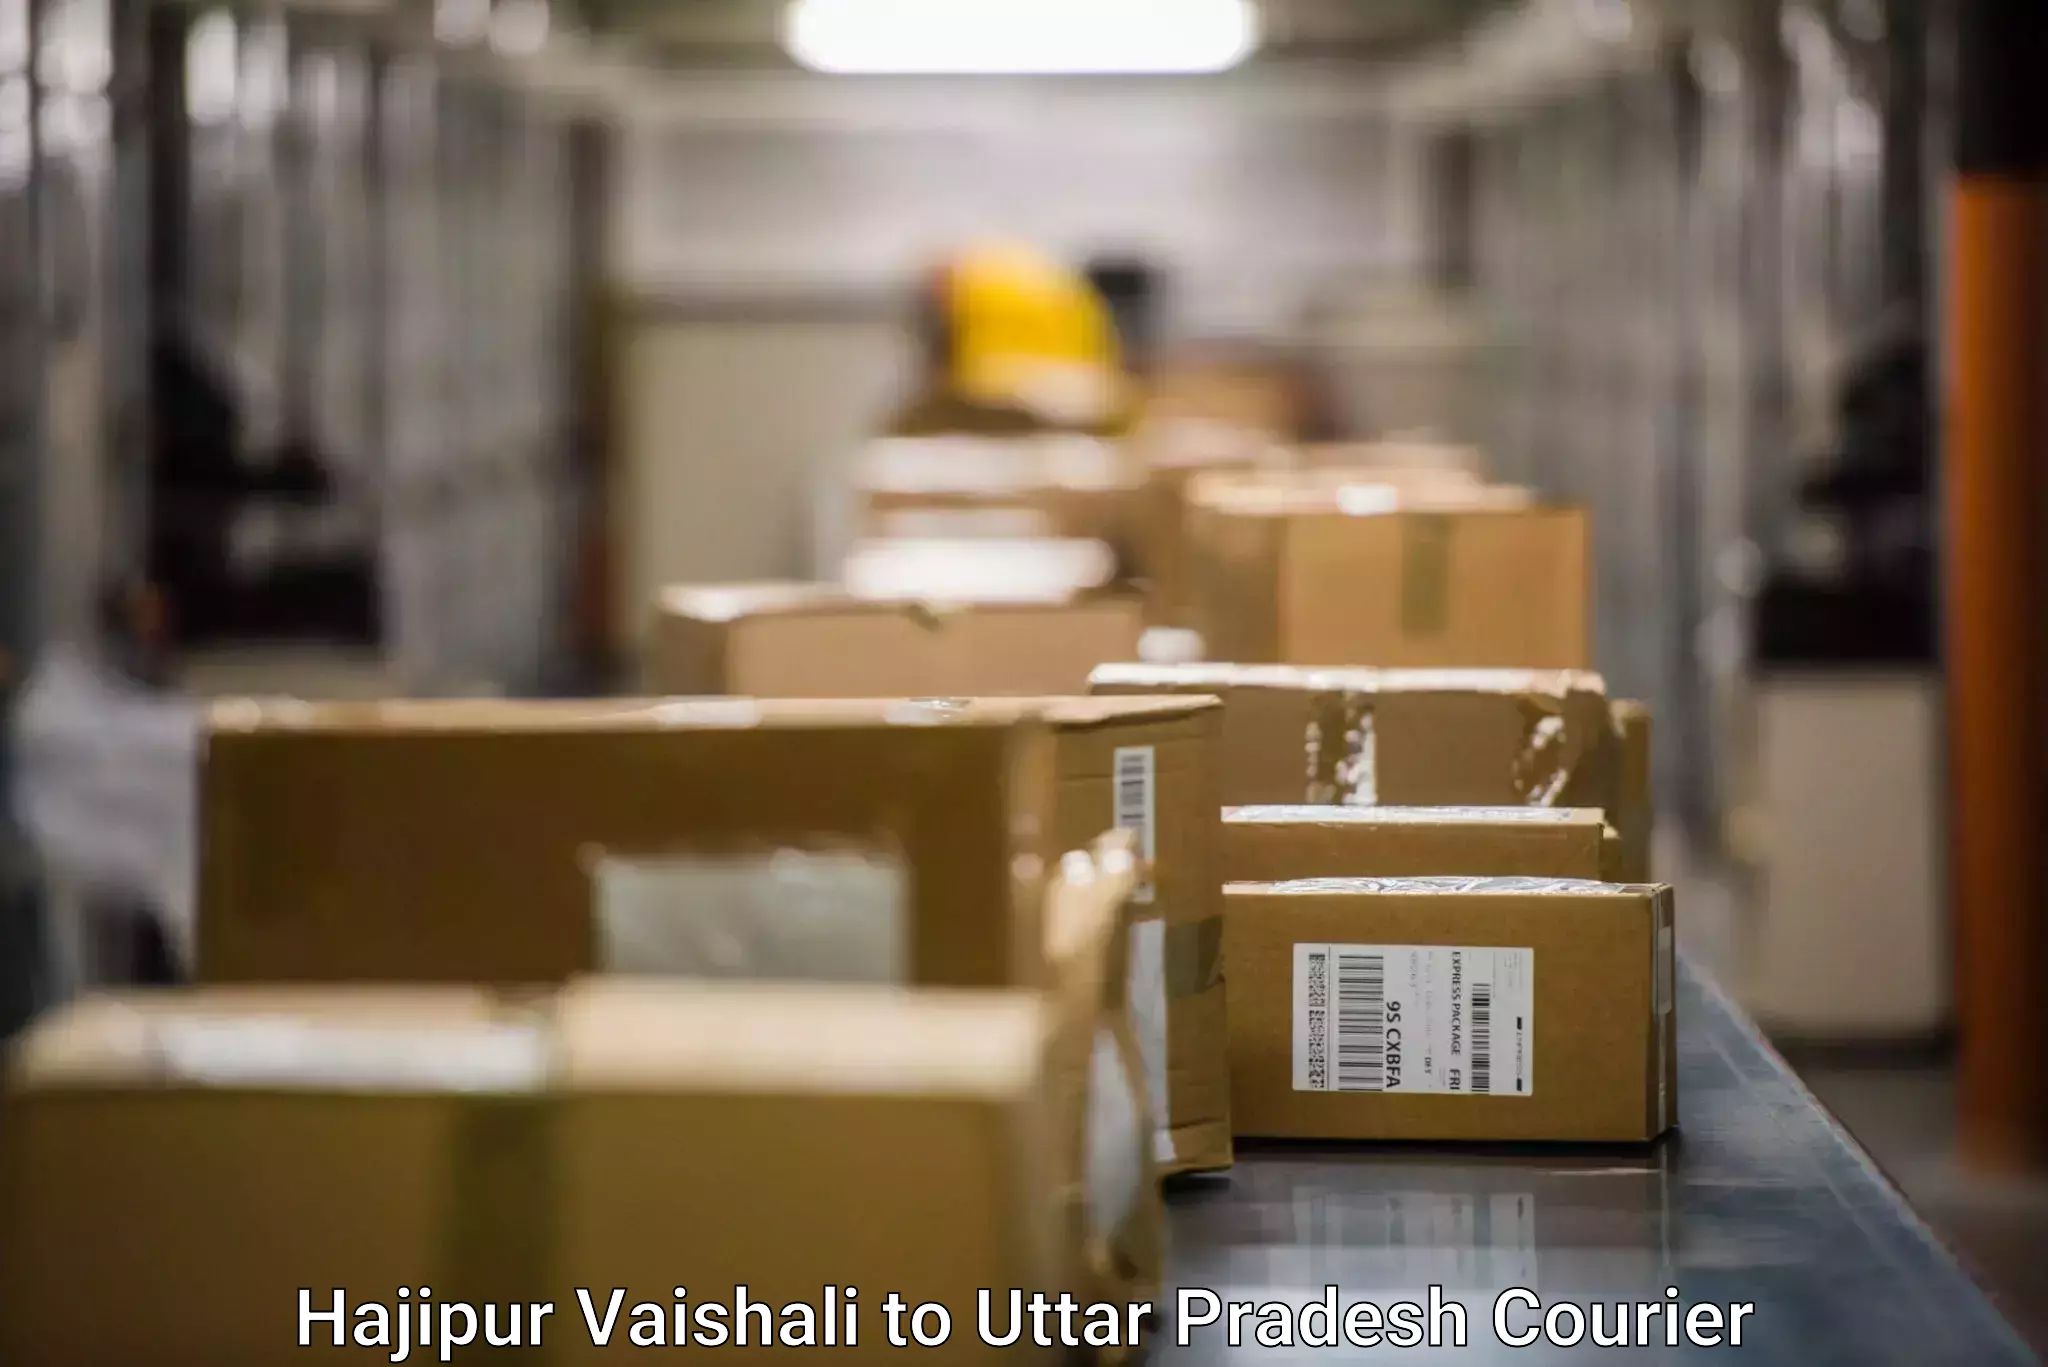 24/7 courier service Hajipur Vaishali to Rampur Maniharan